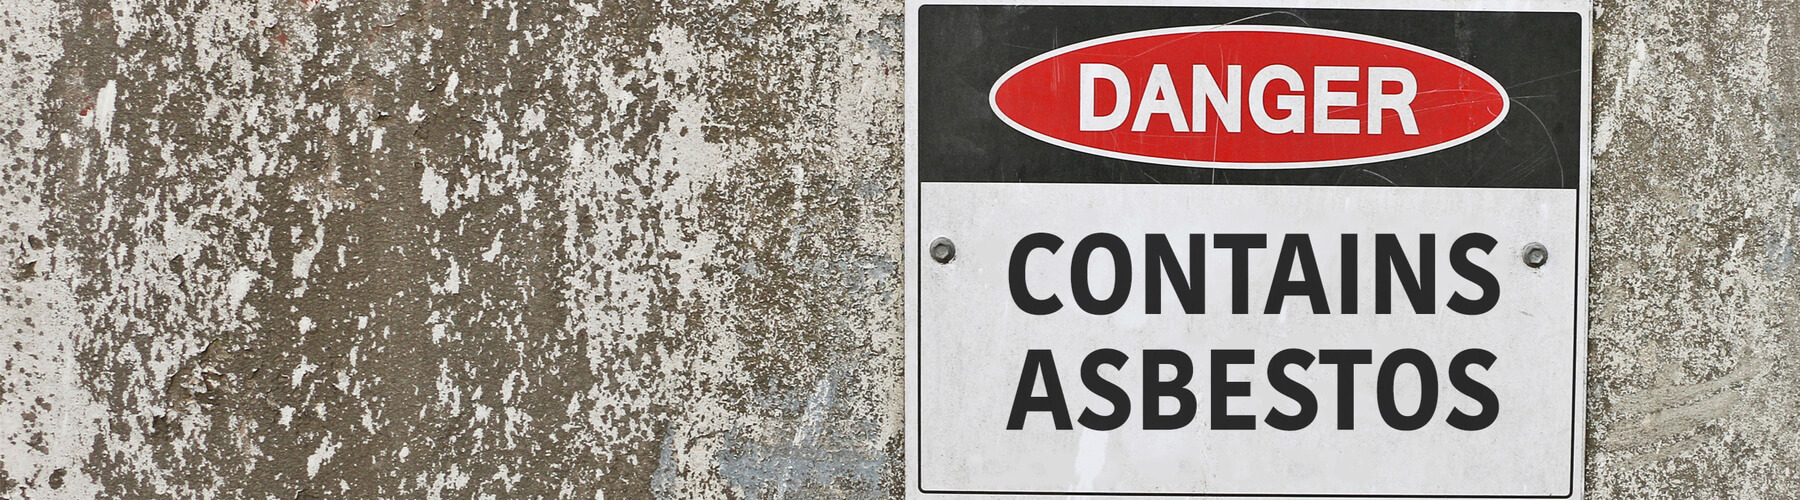 danger, contains asbestos sign